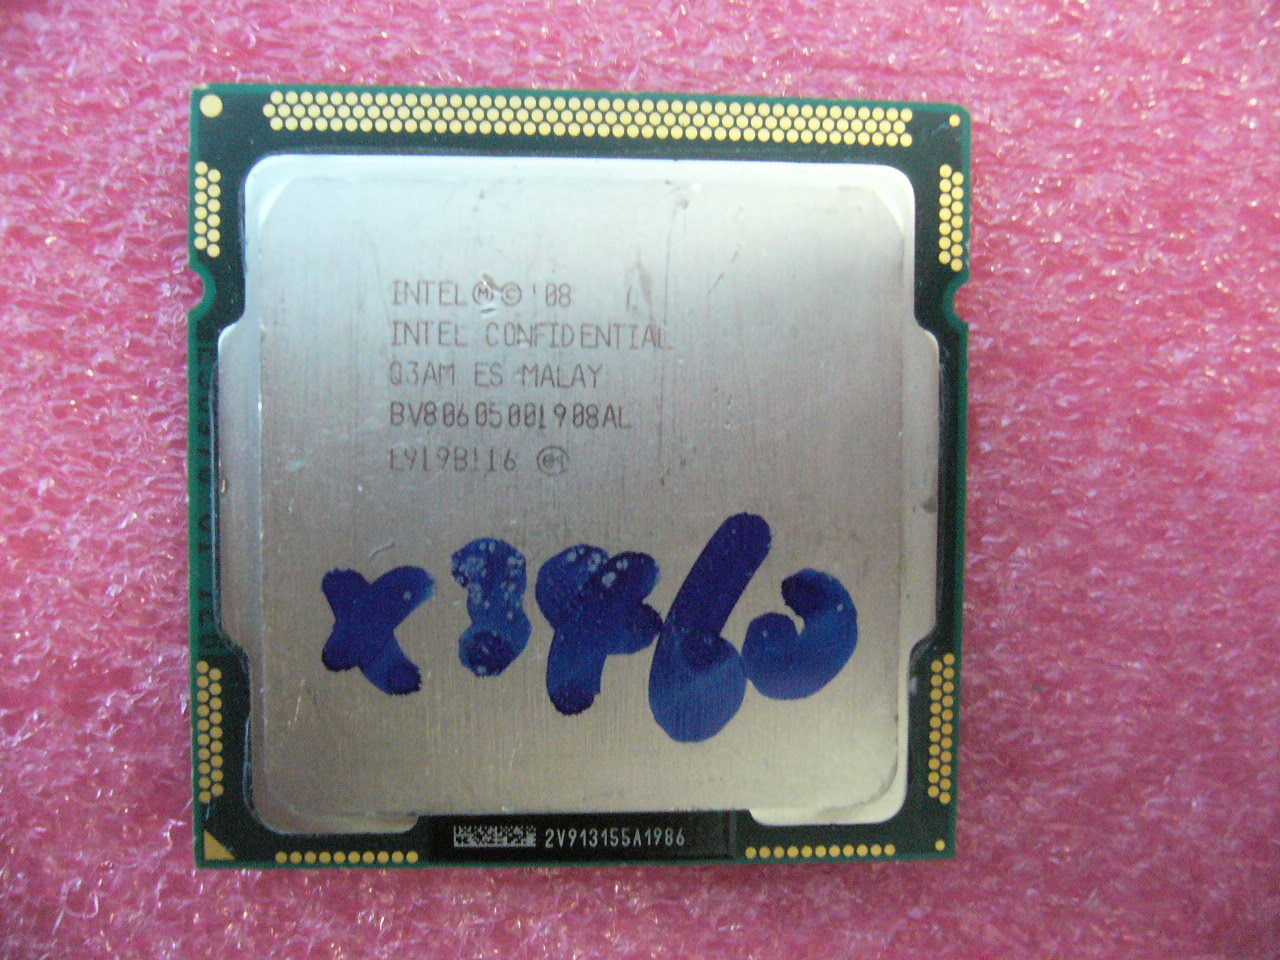 QTY 1x INTEL Xeon ES CPU X3460 2.80GHZ/8MB LGA1156 Q3AM BV80605001908AL - Click Image to Close